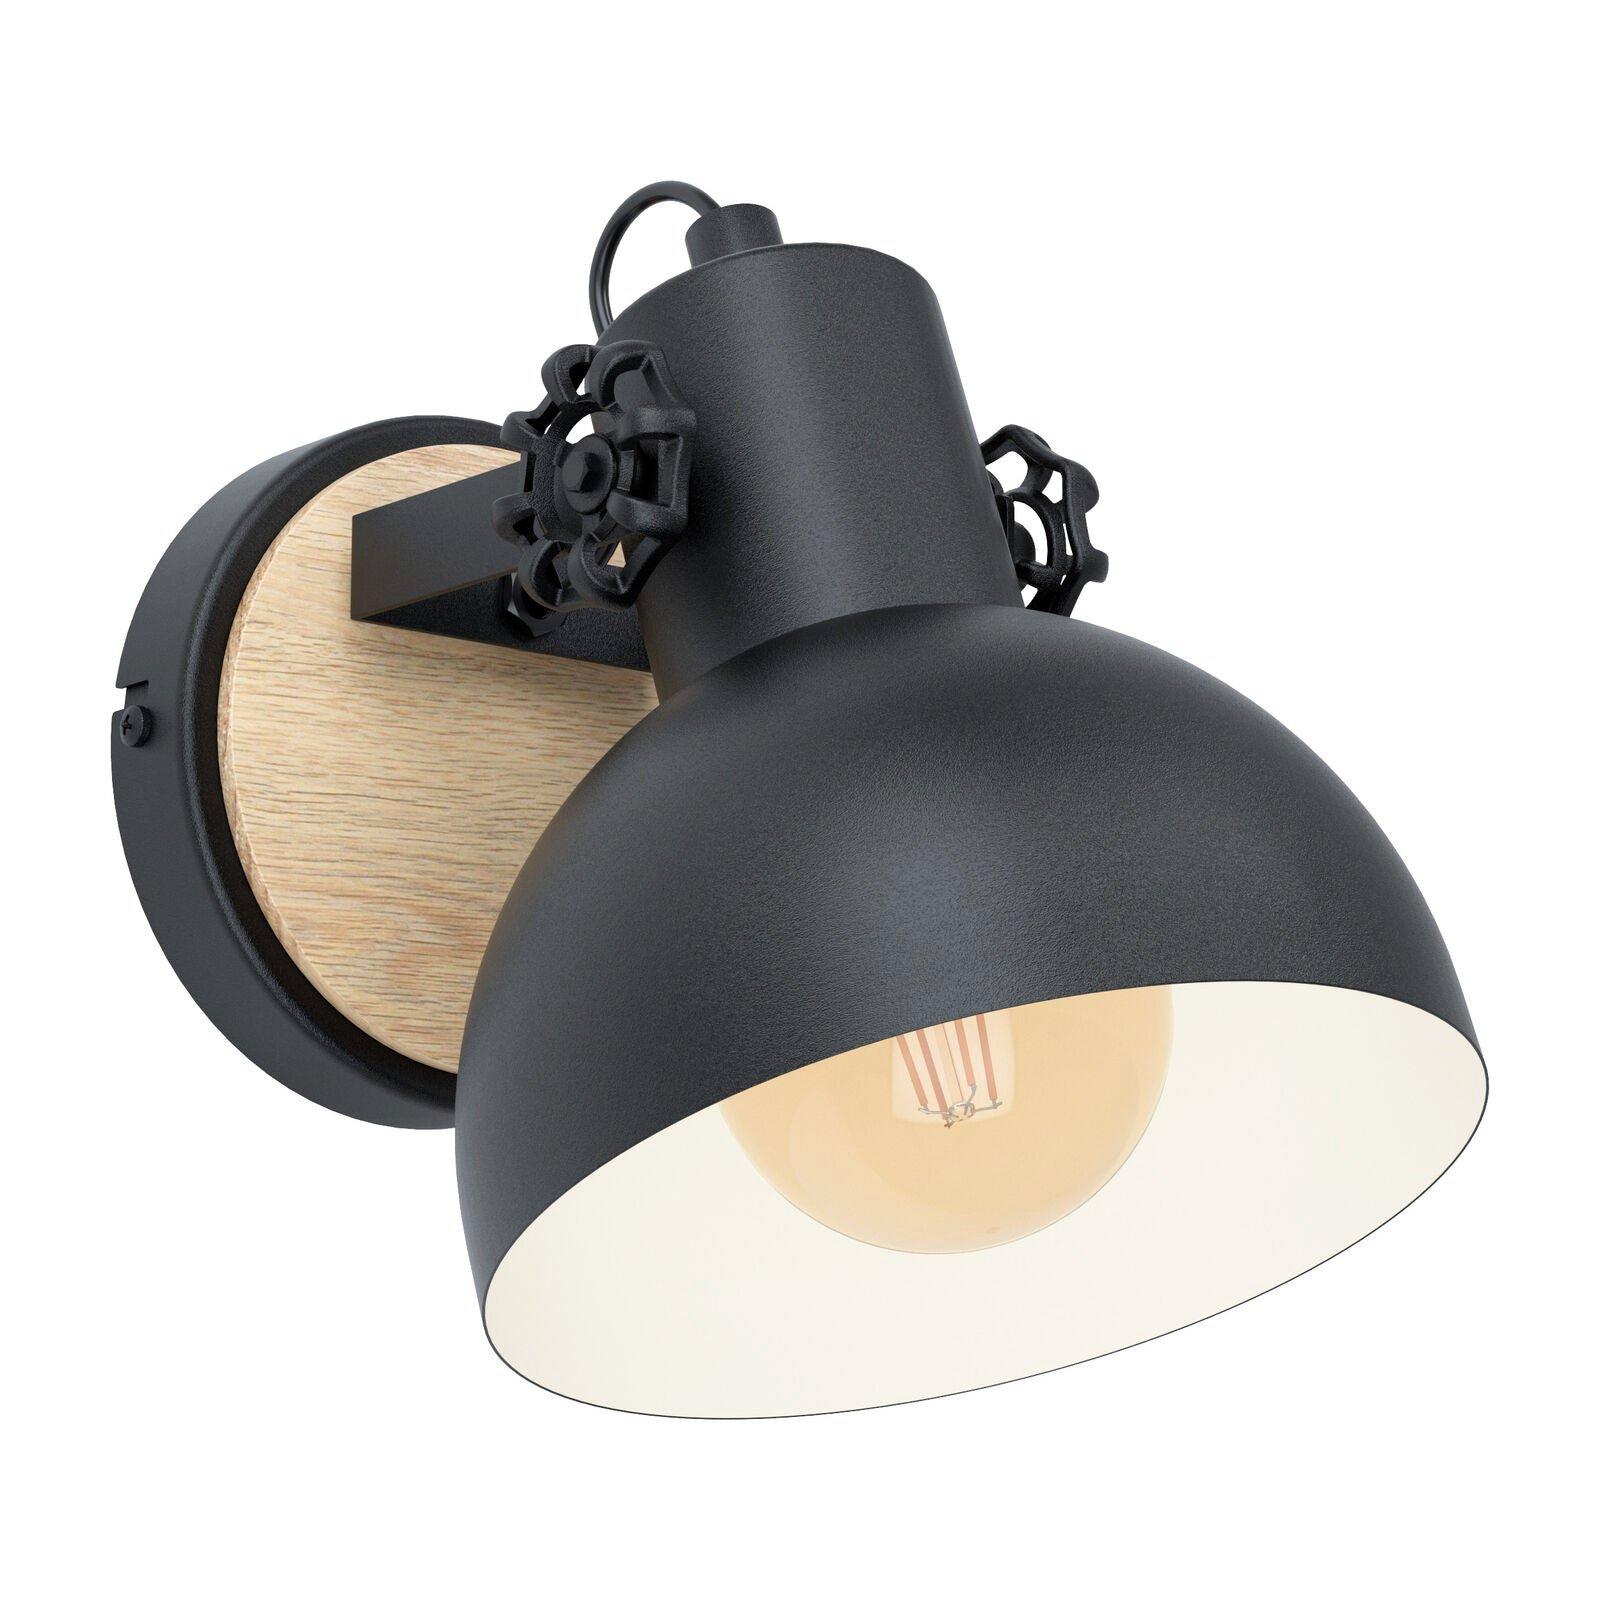 LED Wall Light / Sconce Black & Wood Round Adjustable Shade 1 x 10W E27 Bulb